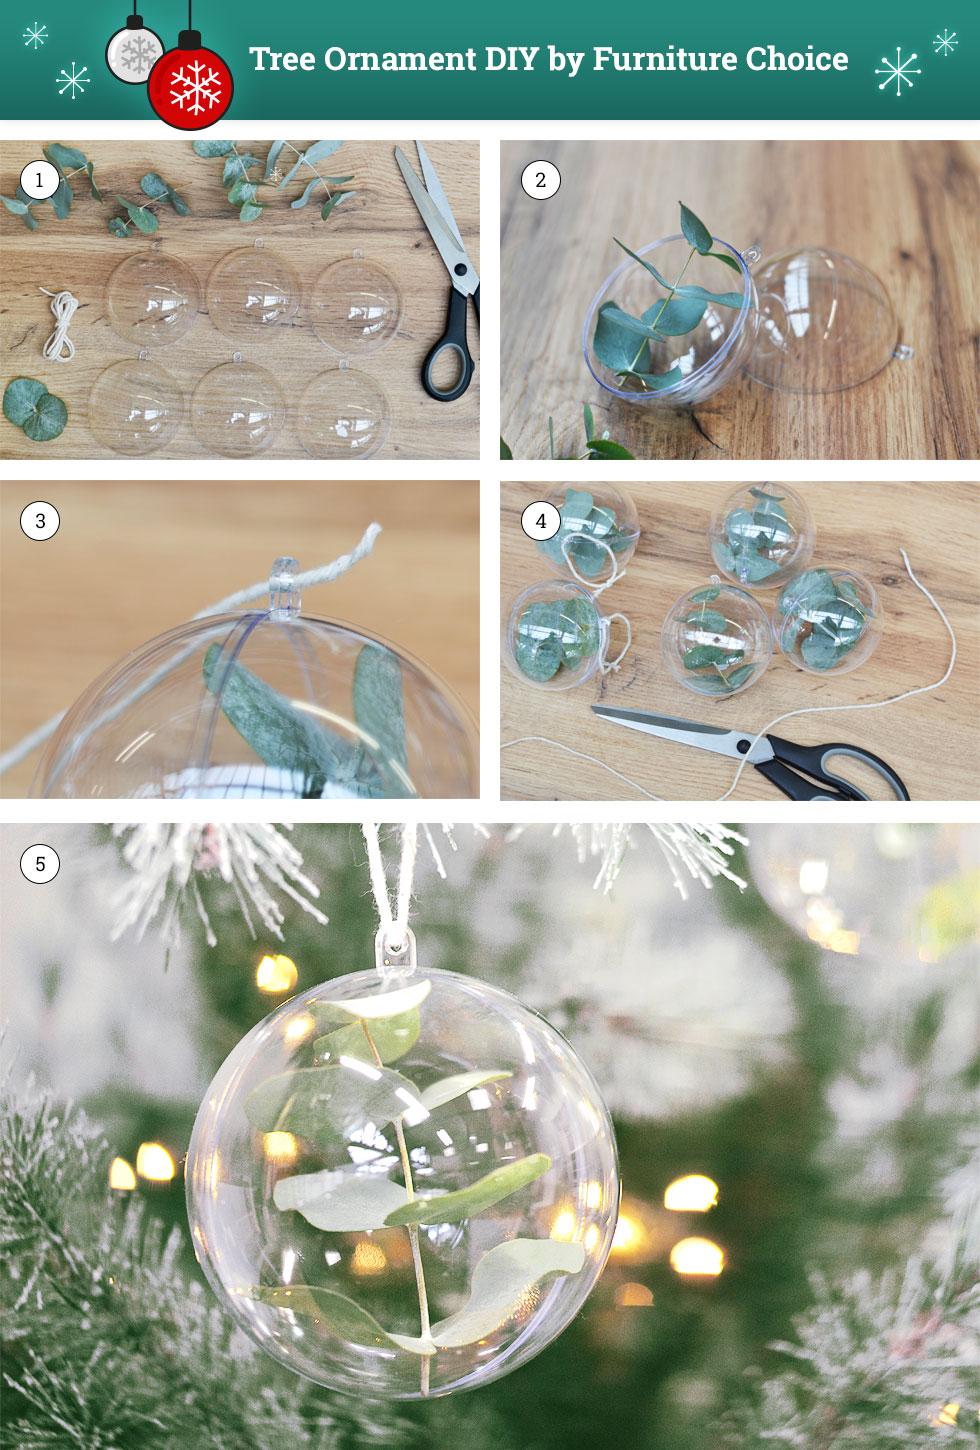 DIY steps to making a Christmas tree ornament.